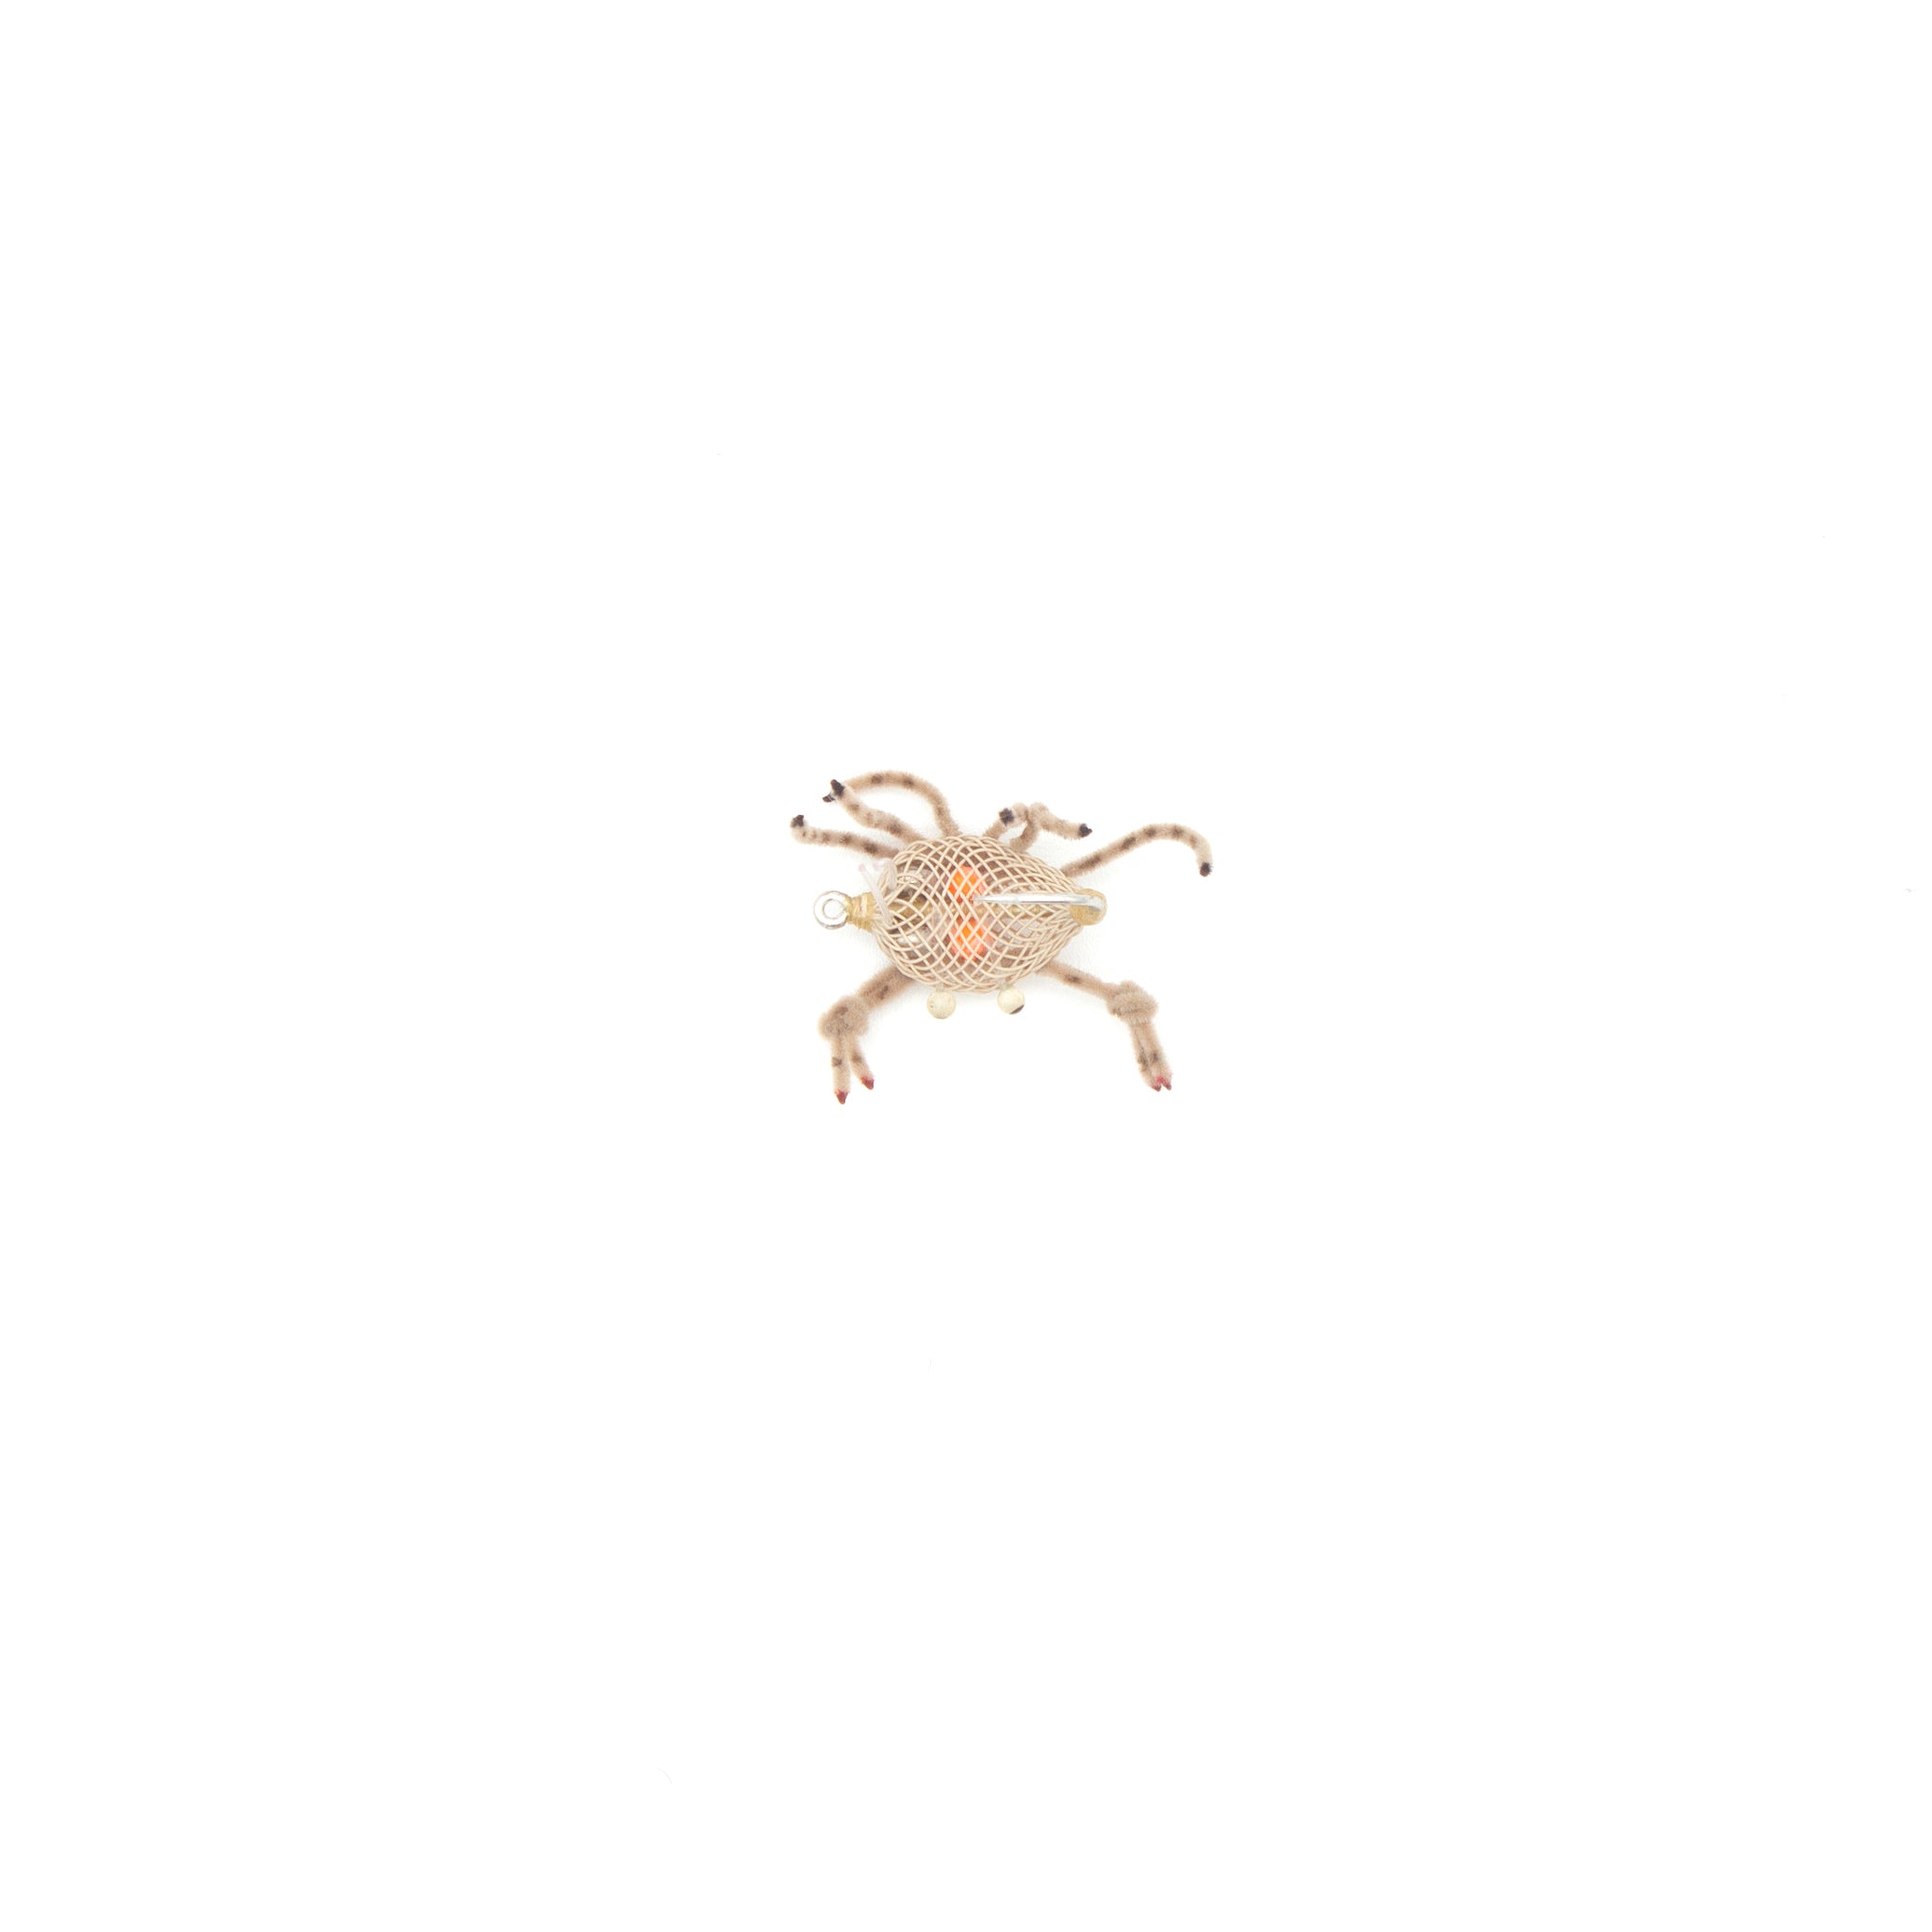 Alphlexo Crab